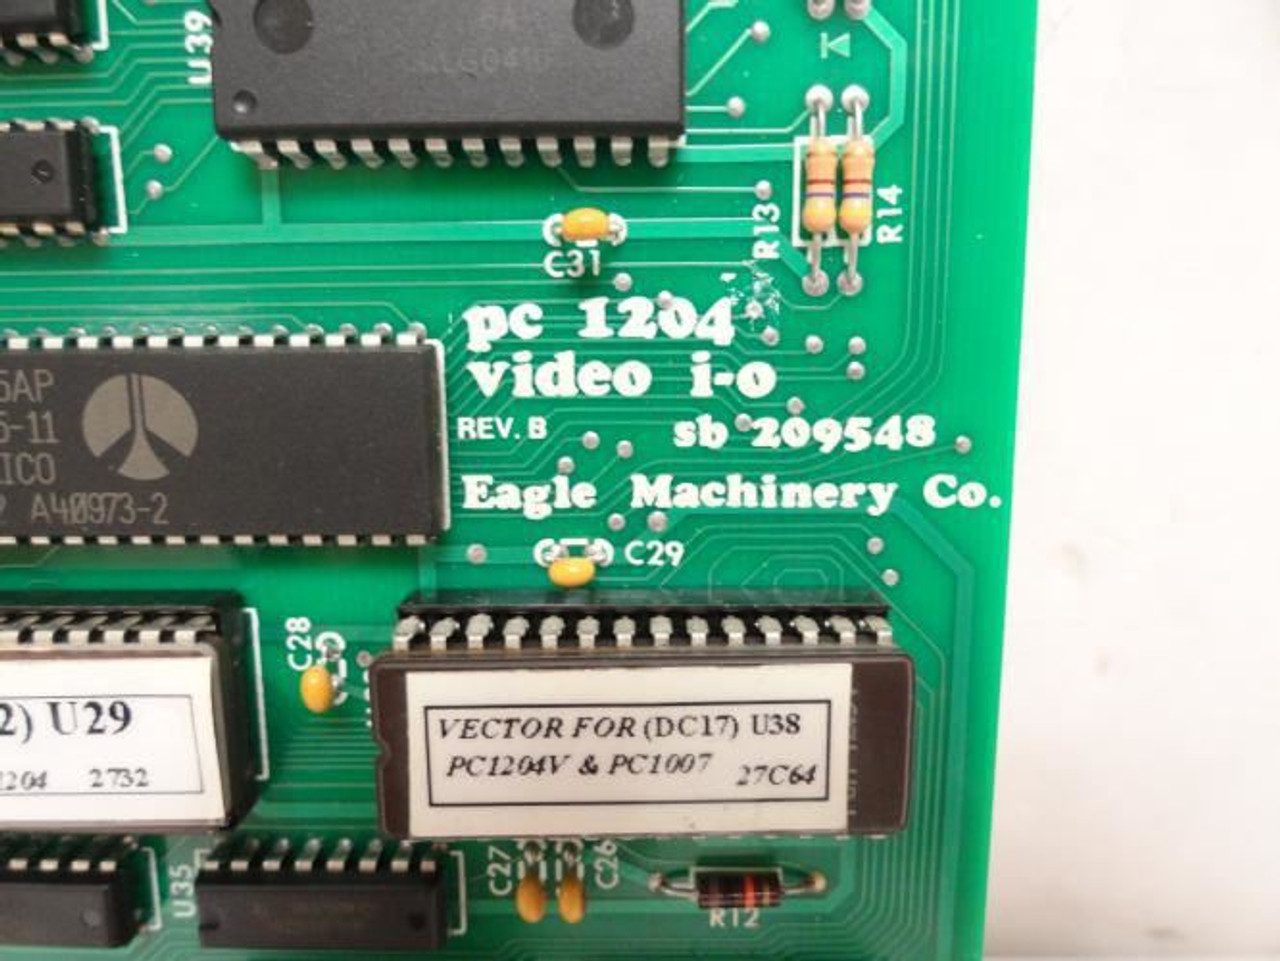 Eagle Machinery Inc SB209548; Video IO Control Board PC 1204